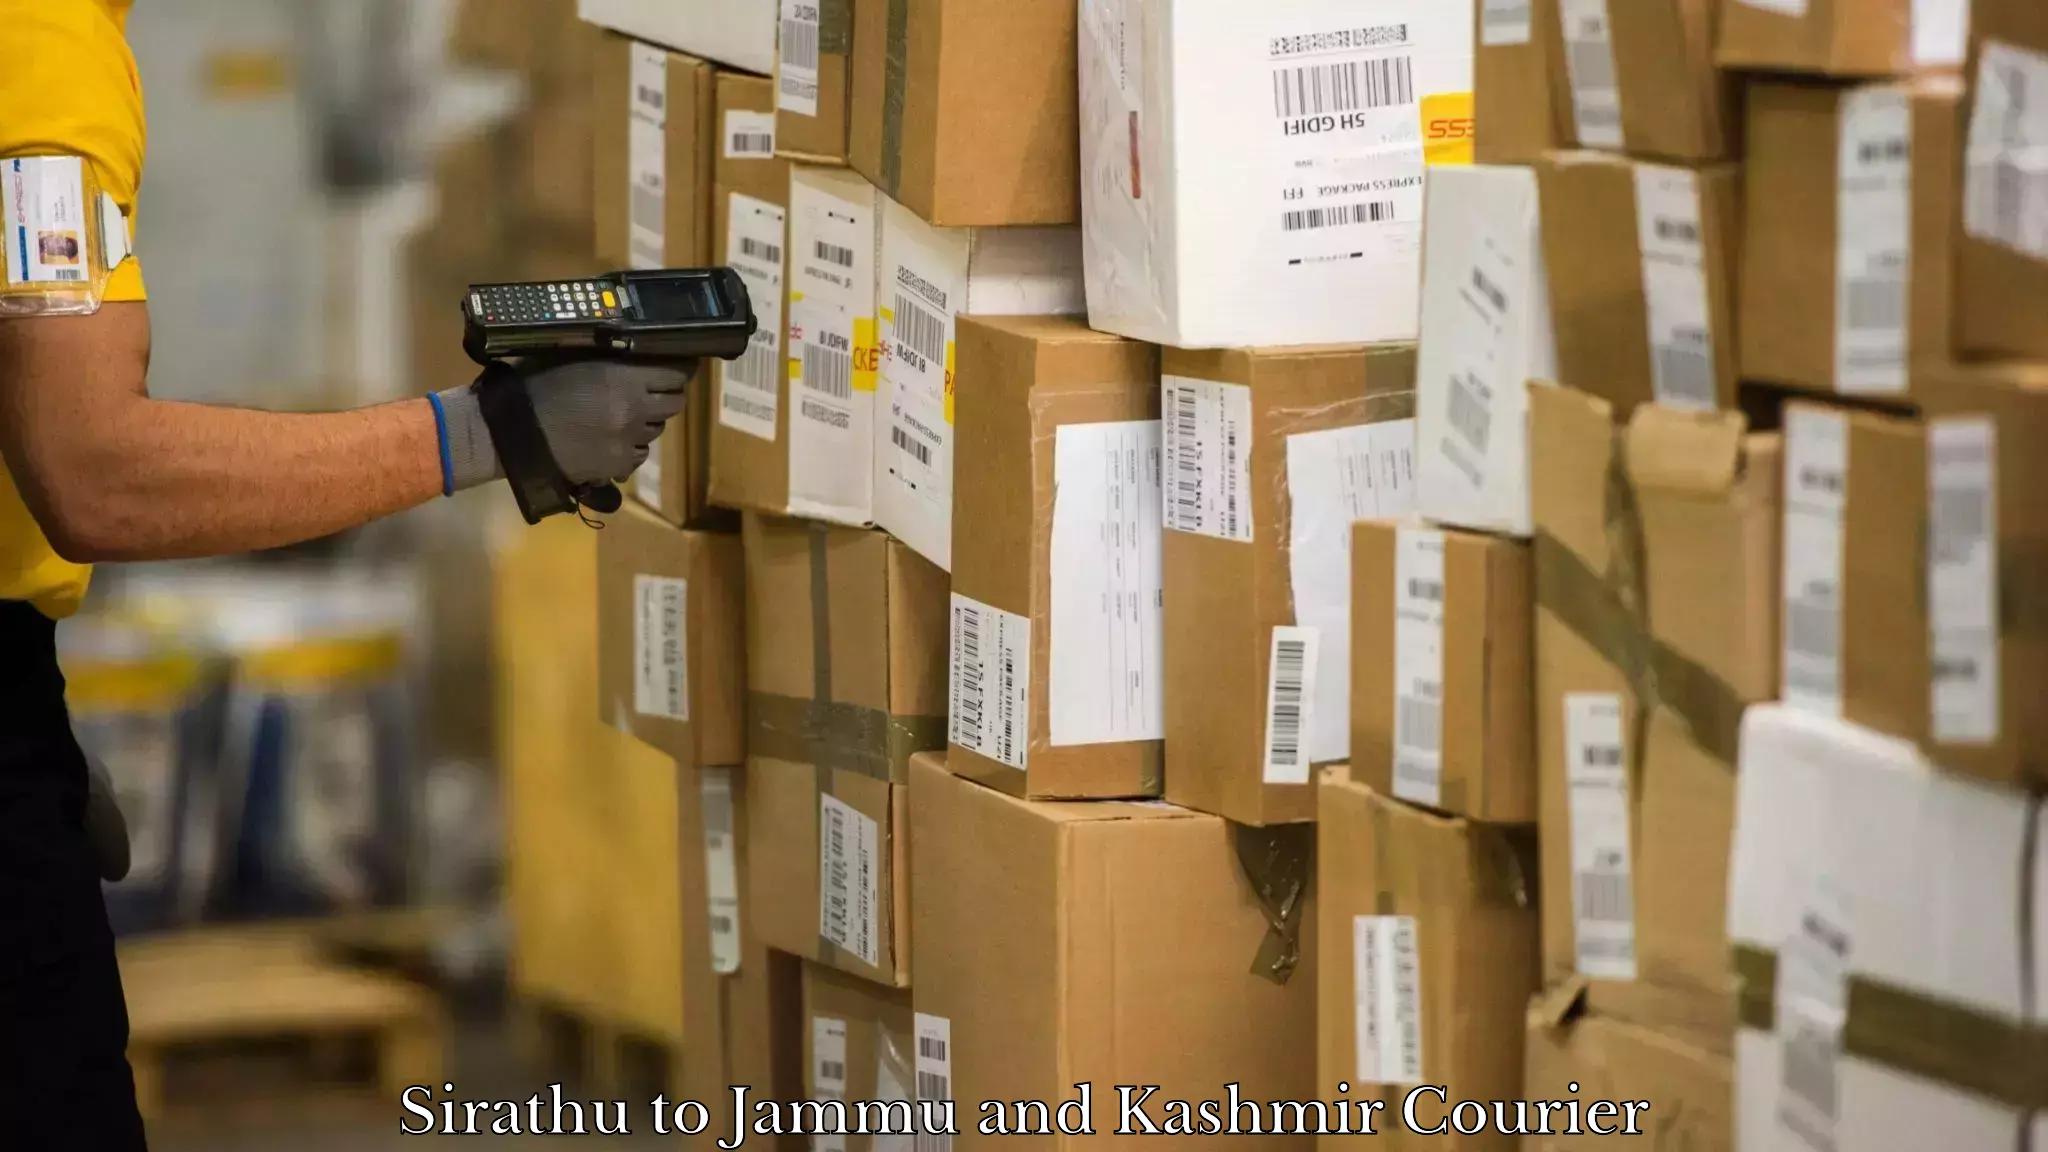 Express logistics providers Sirathu to Jammu and Kashmir